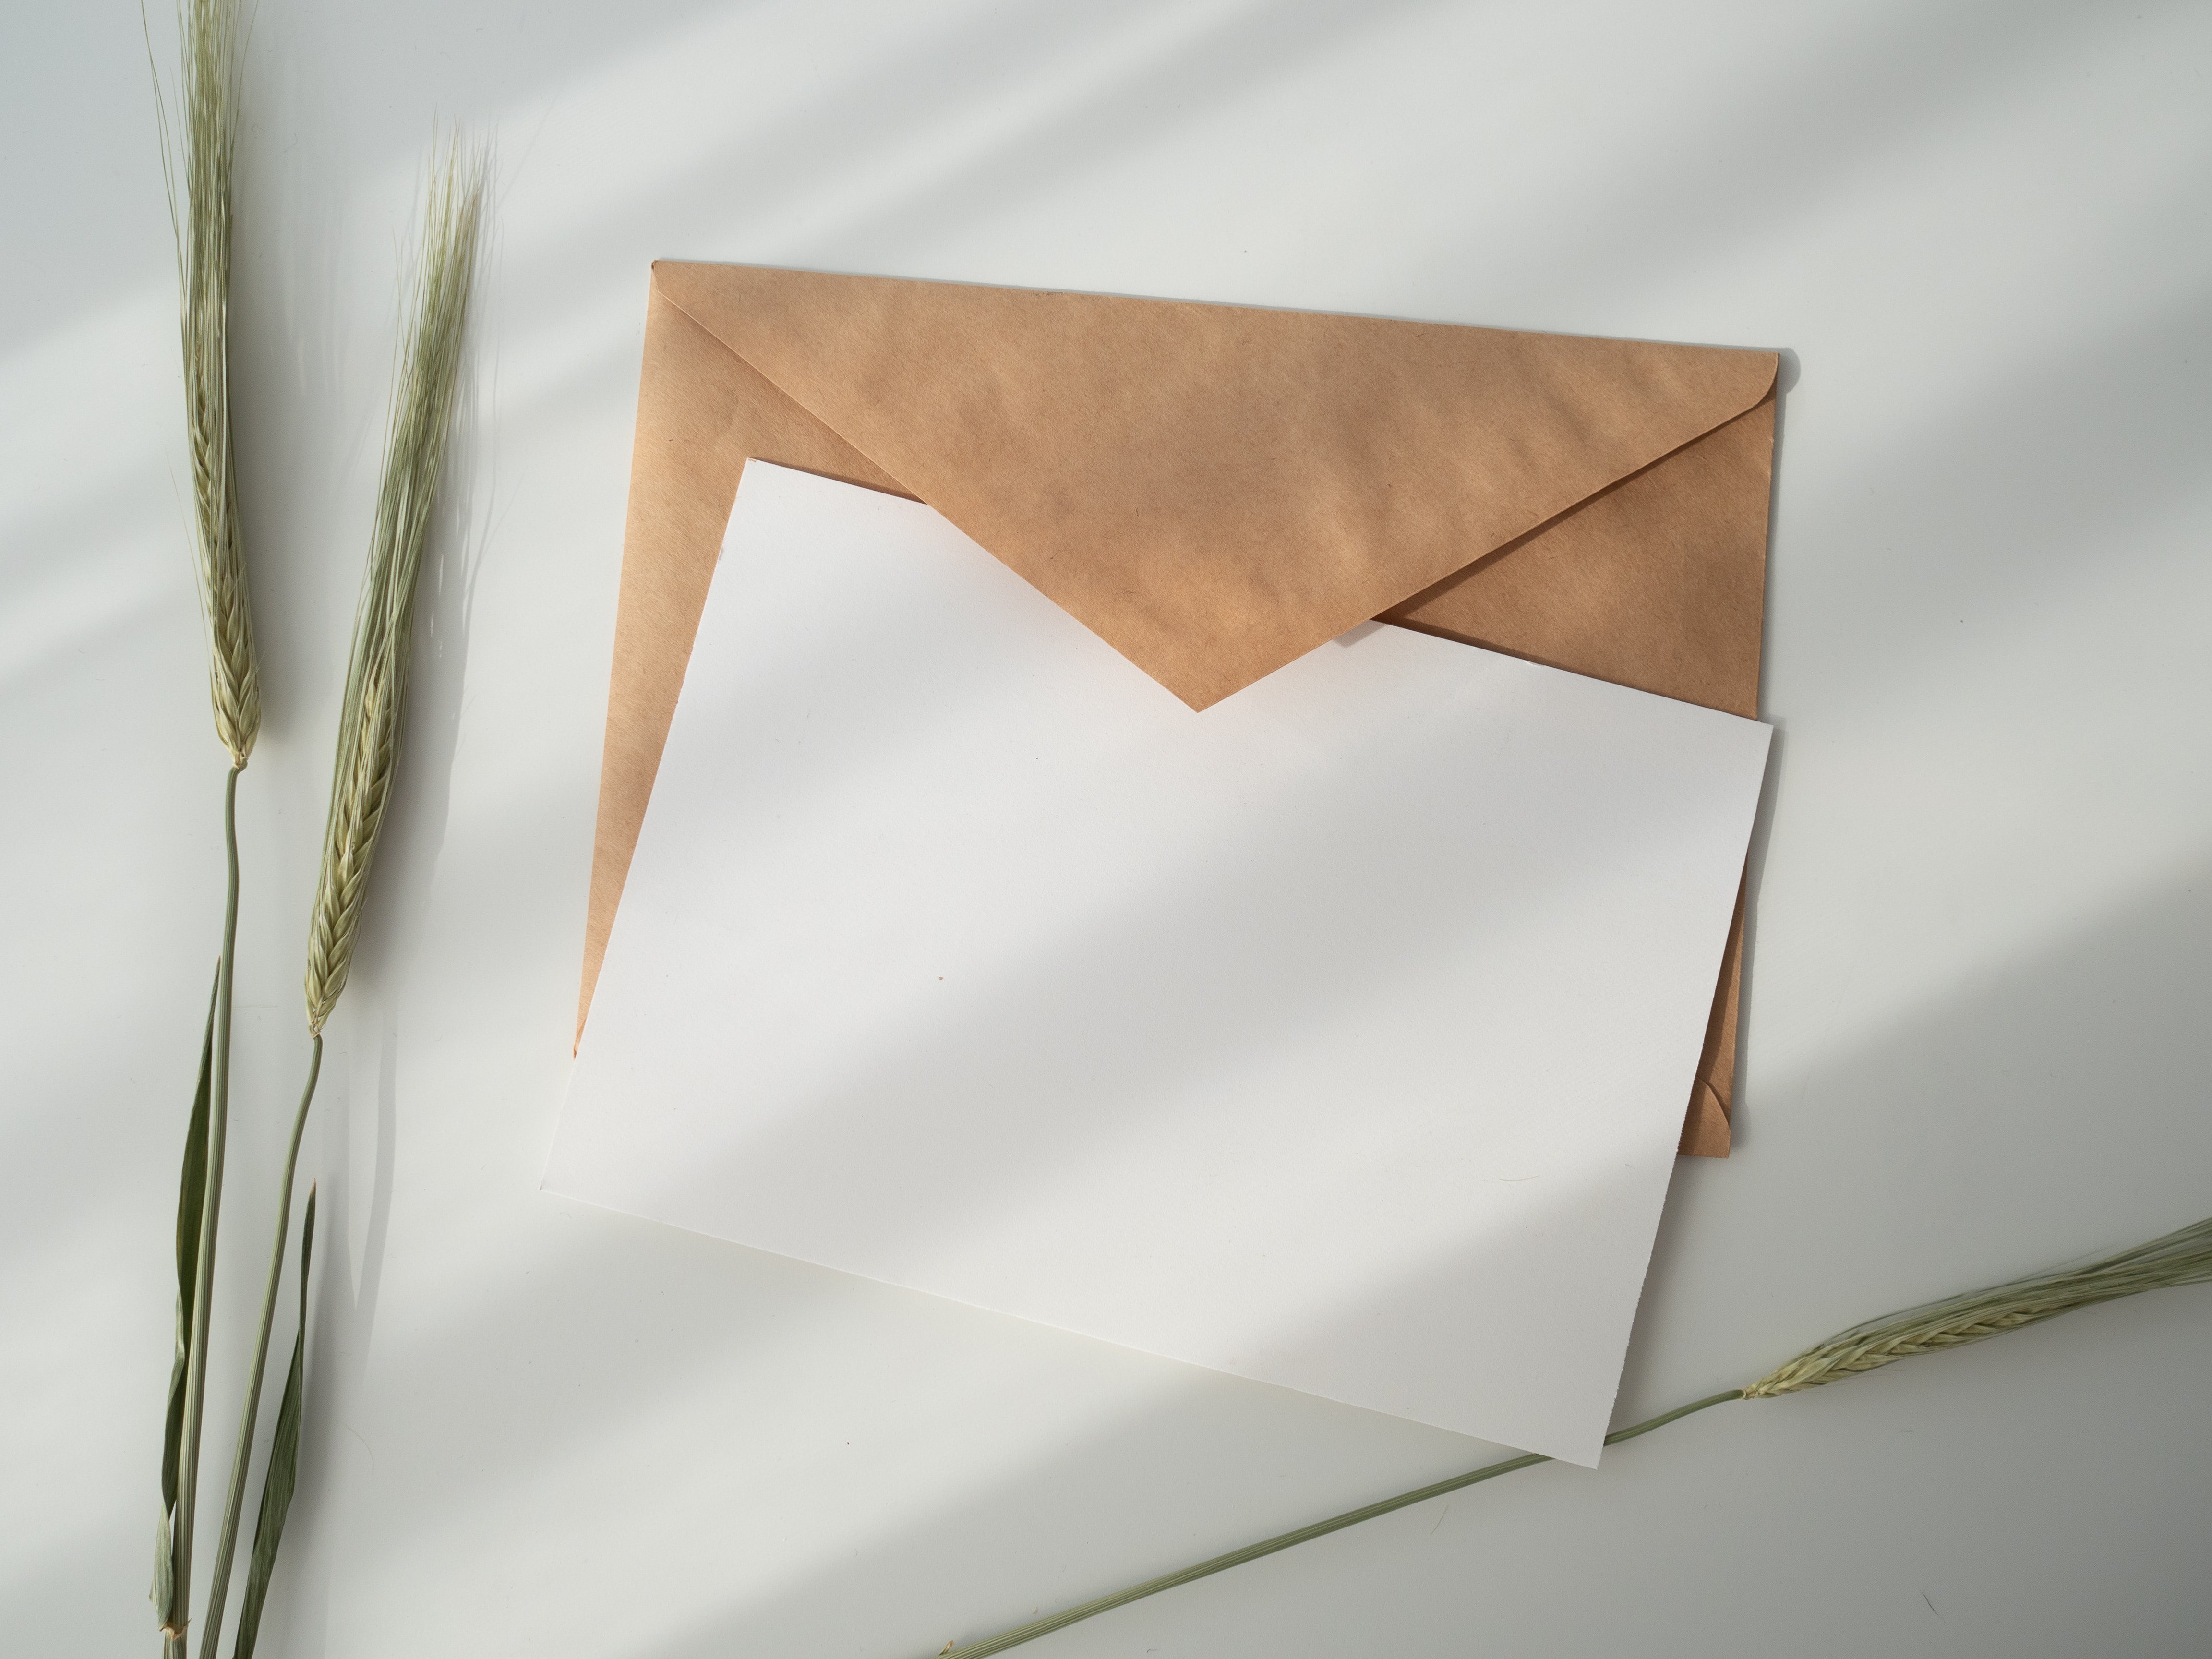 A letter and an envelope | Source: Unsplash.com